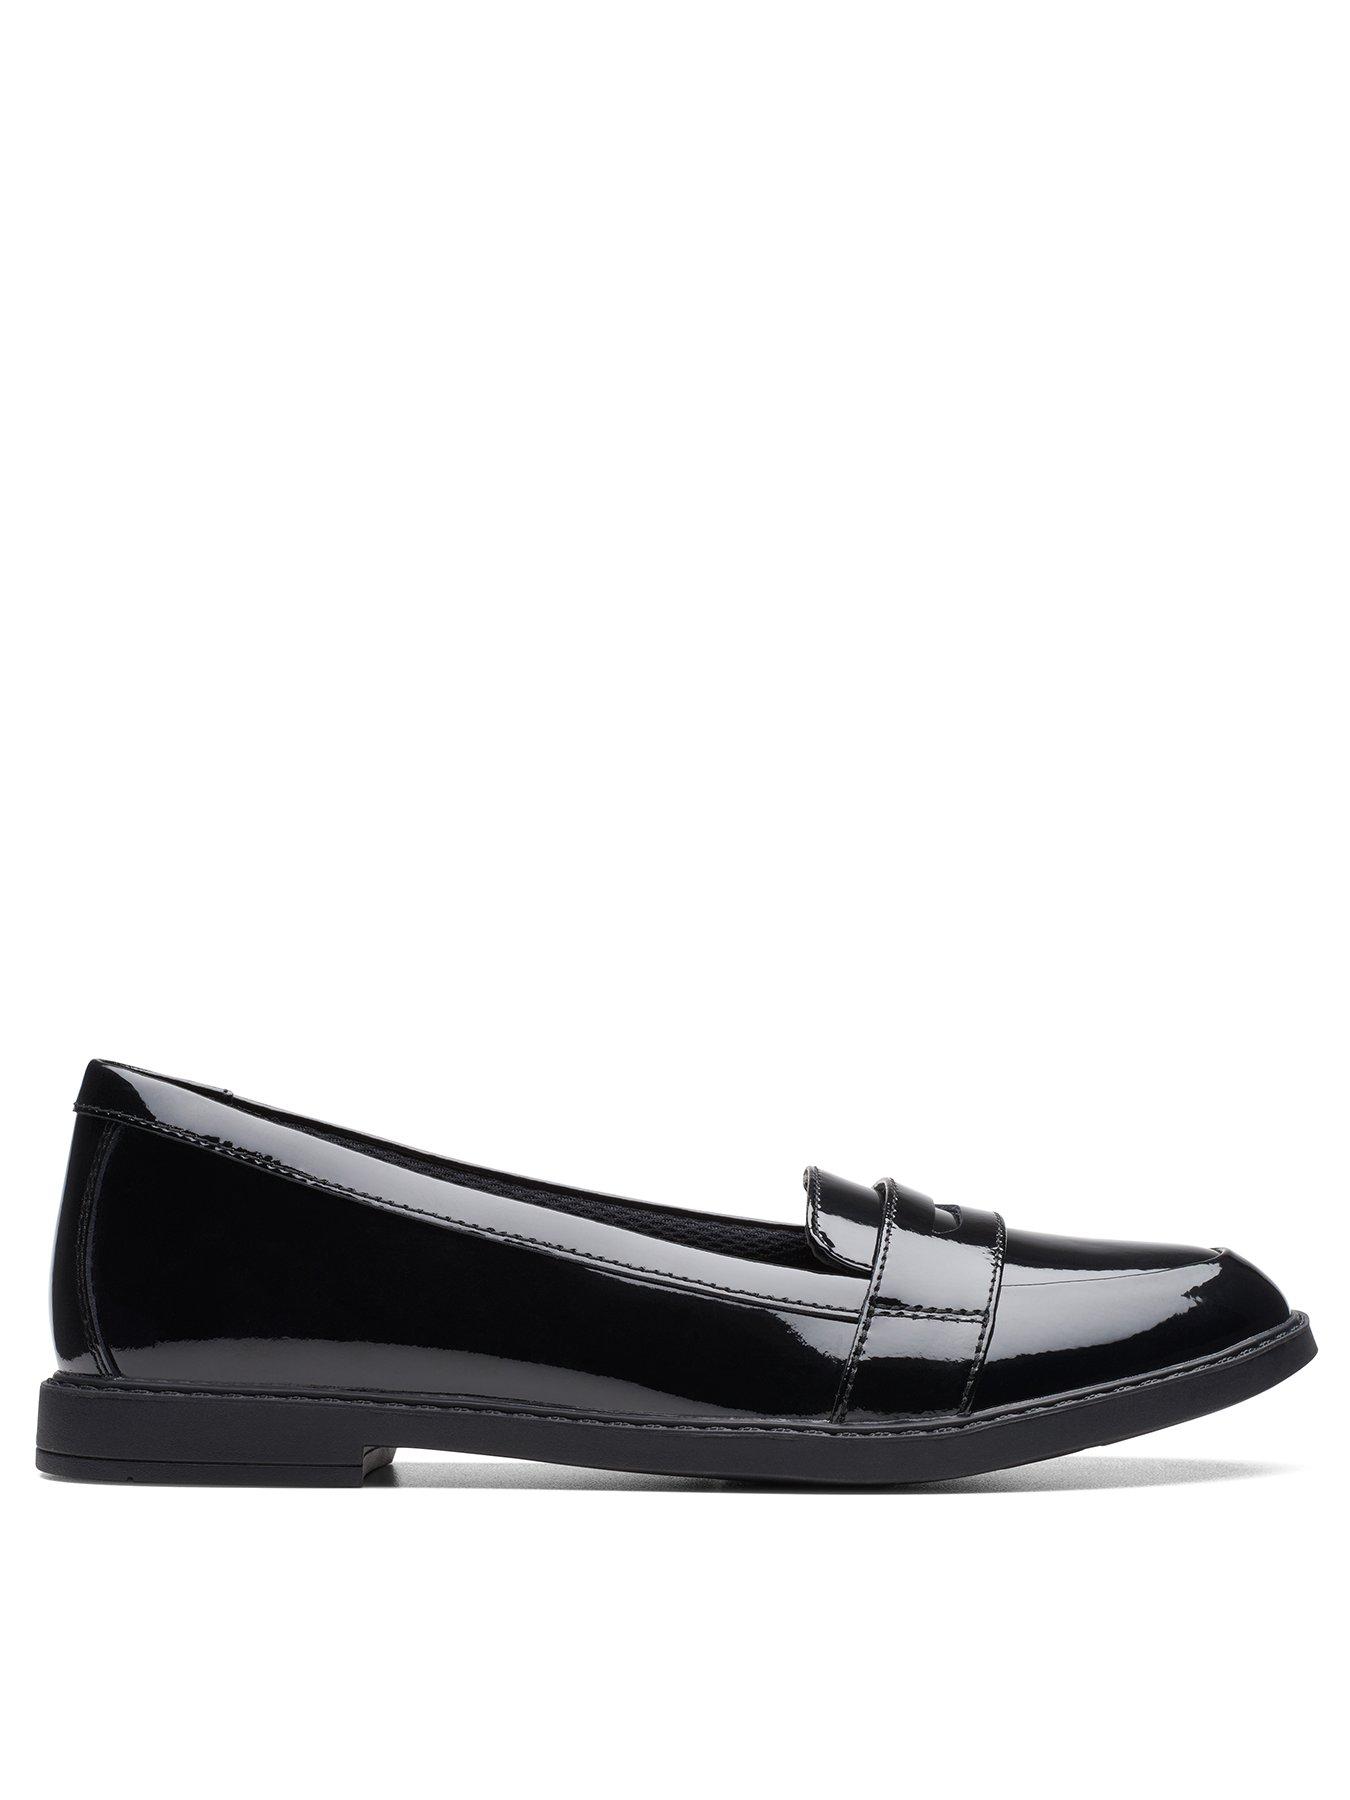 Black Standard Fit (F) School Leather Loafer Shoes